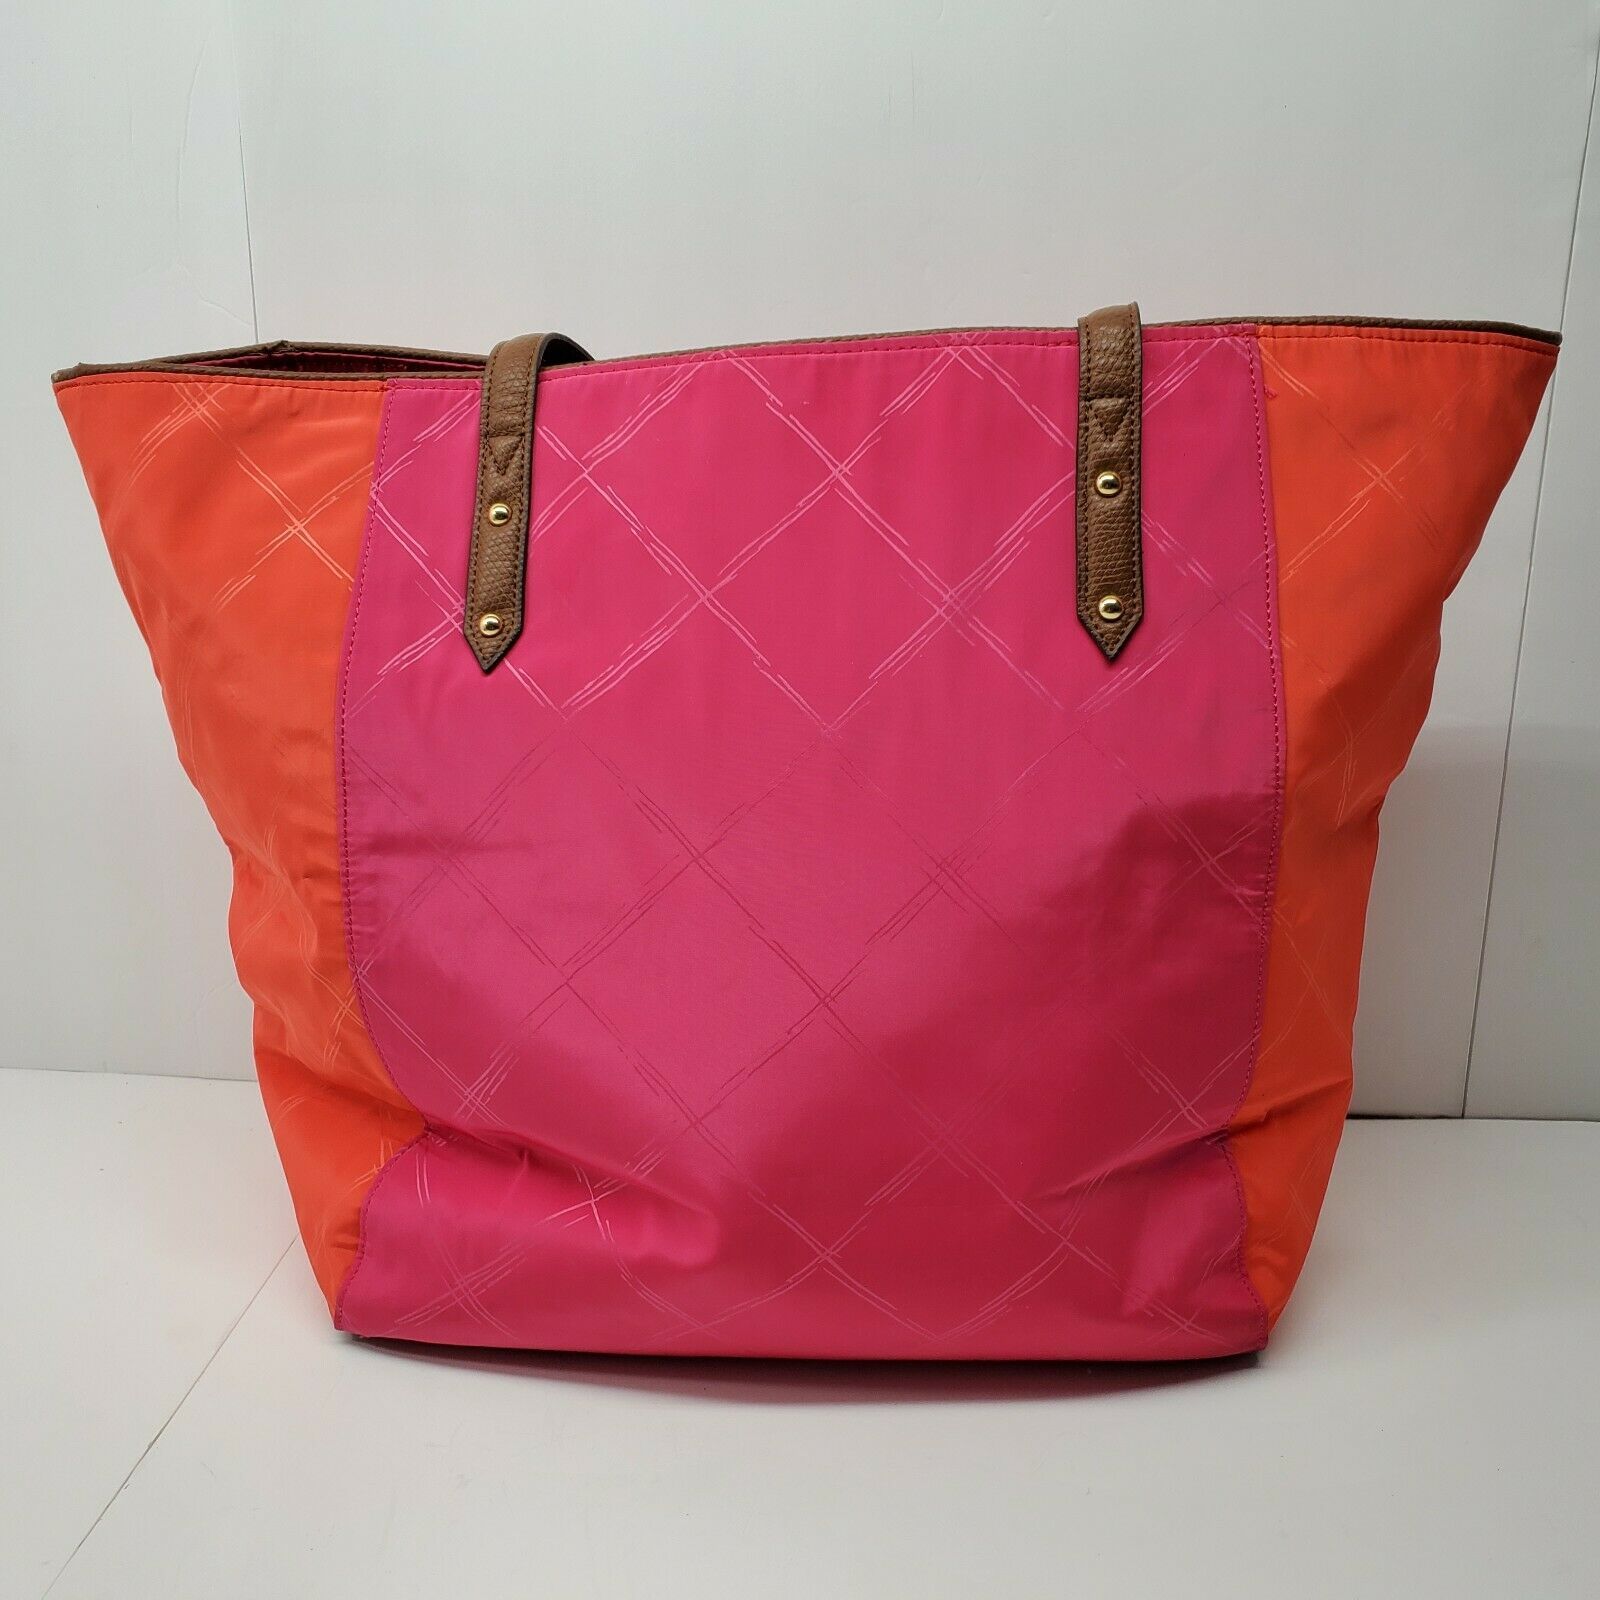 Vera Bradley Pink Orange Nylon Tote Bag Shopper Purse Brown handles ...